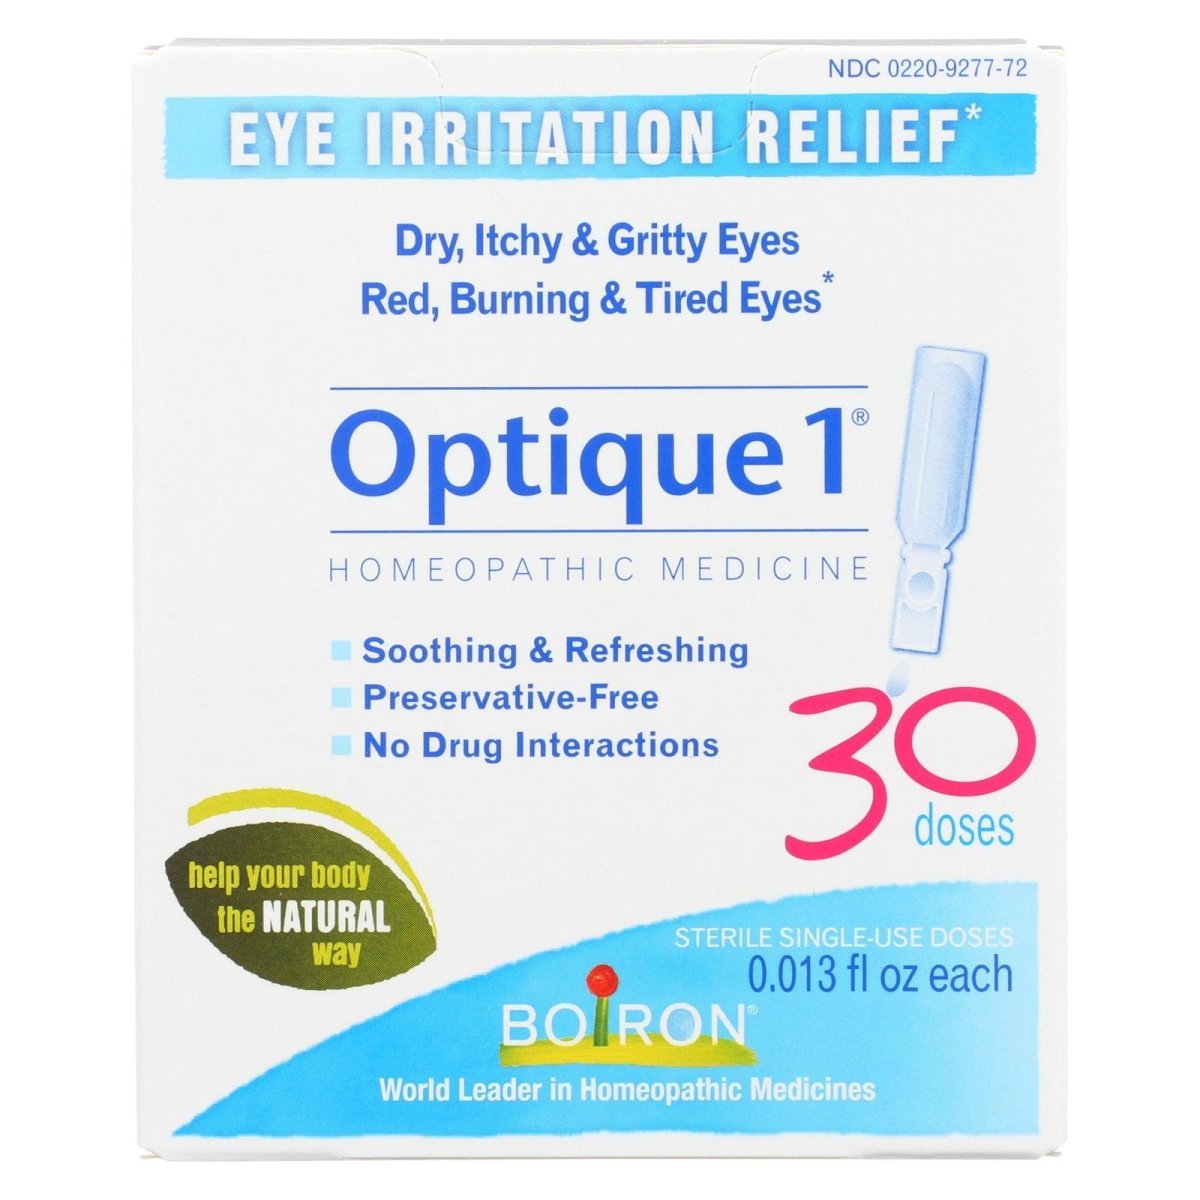 Boiron optique 1 Eye Irritation Relief Eye Drops, 30 doses  